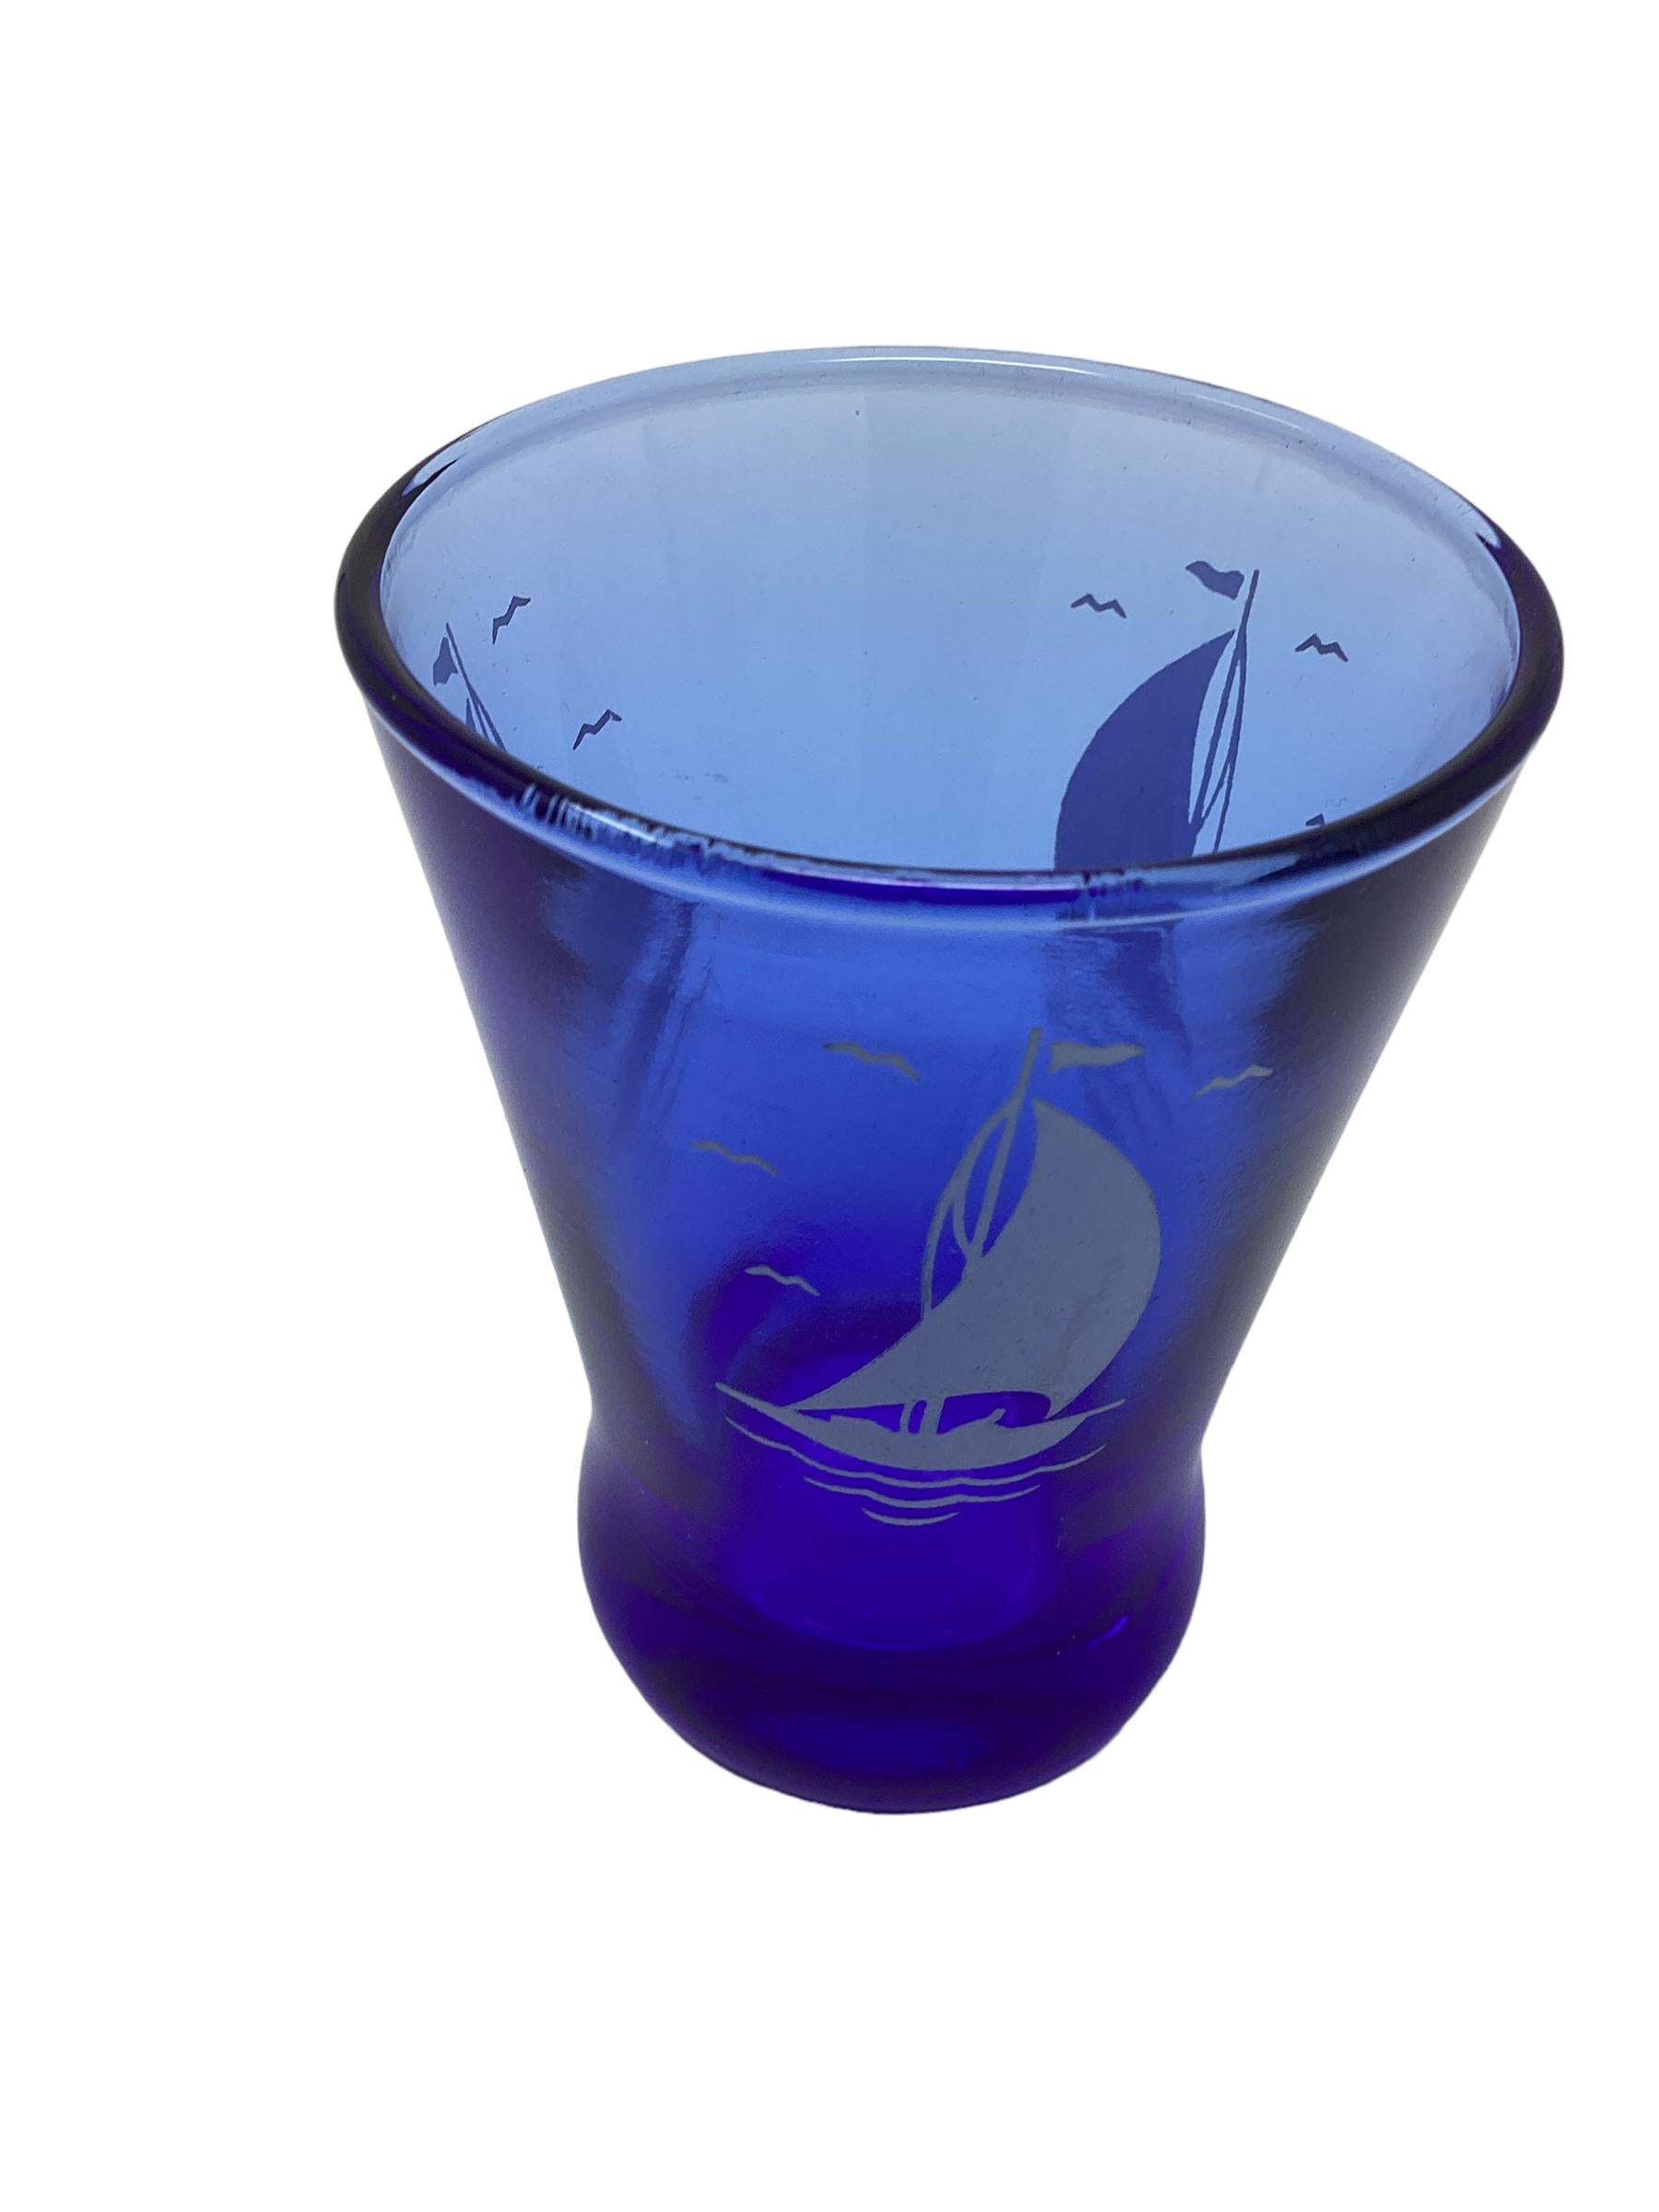 Hazel Atlas Sportsman Series Cobalt Blue with White Sailboat Cocktail Set. The cocktail cups measure 2.5